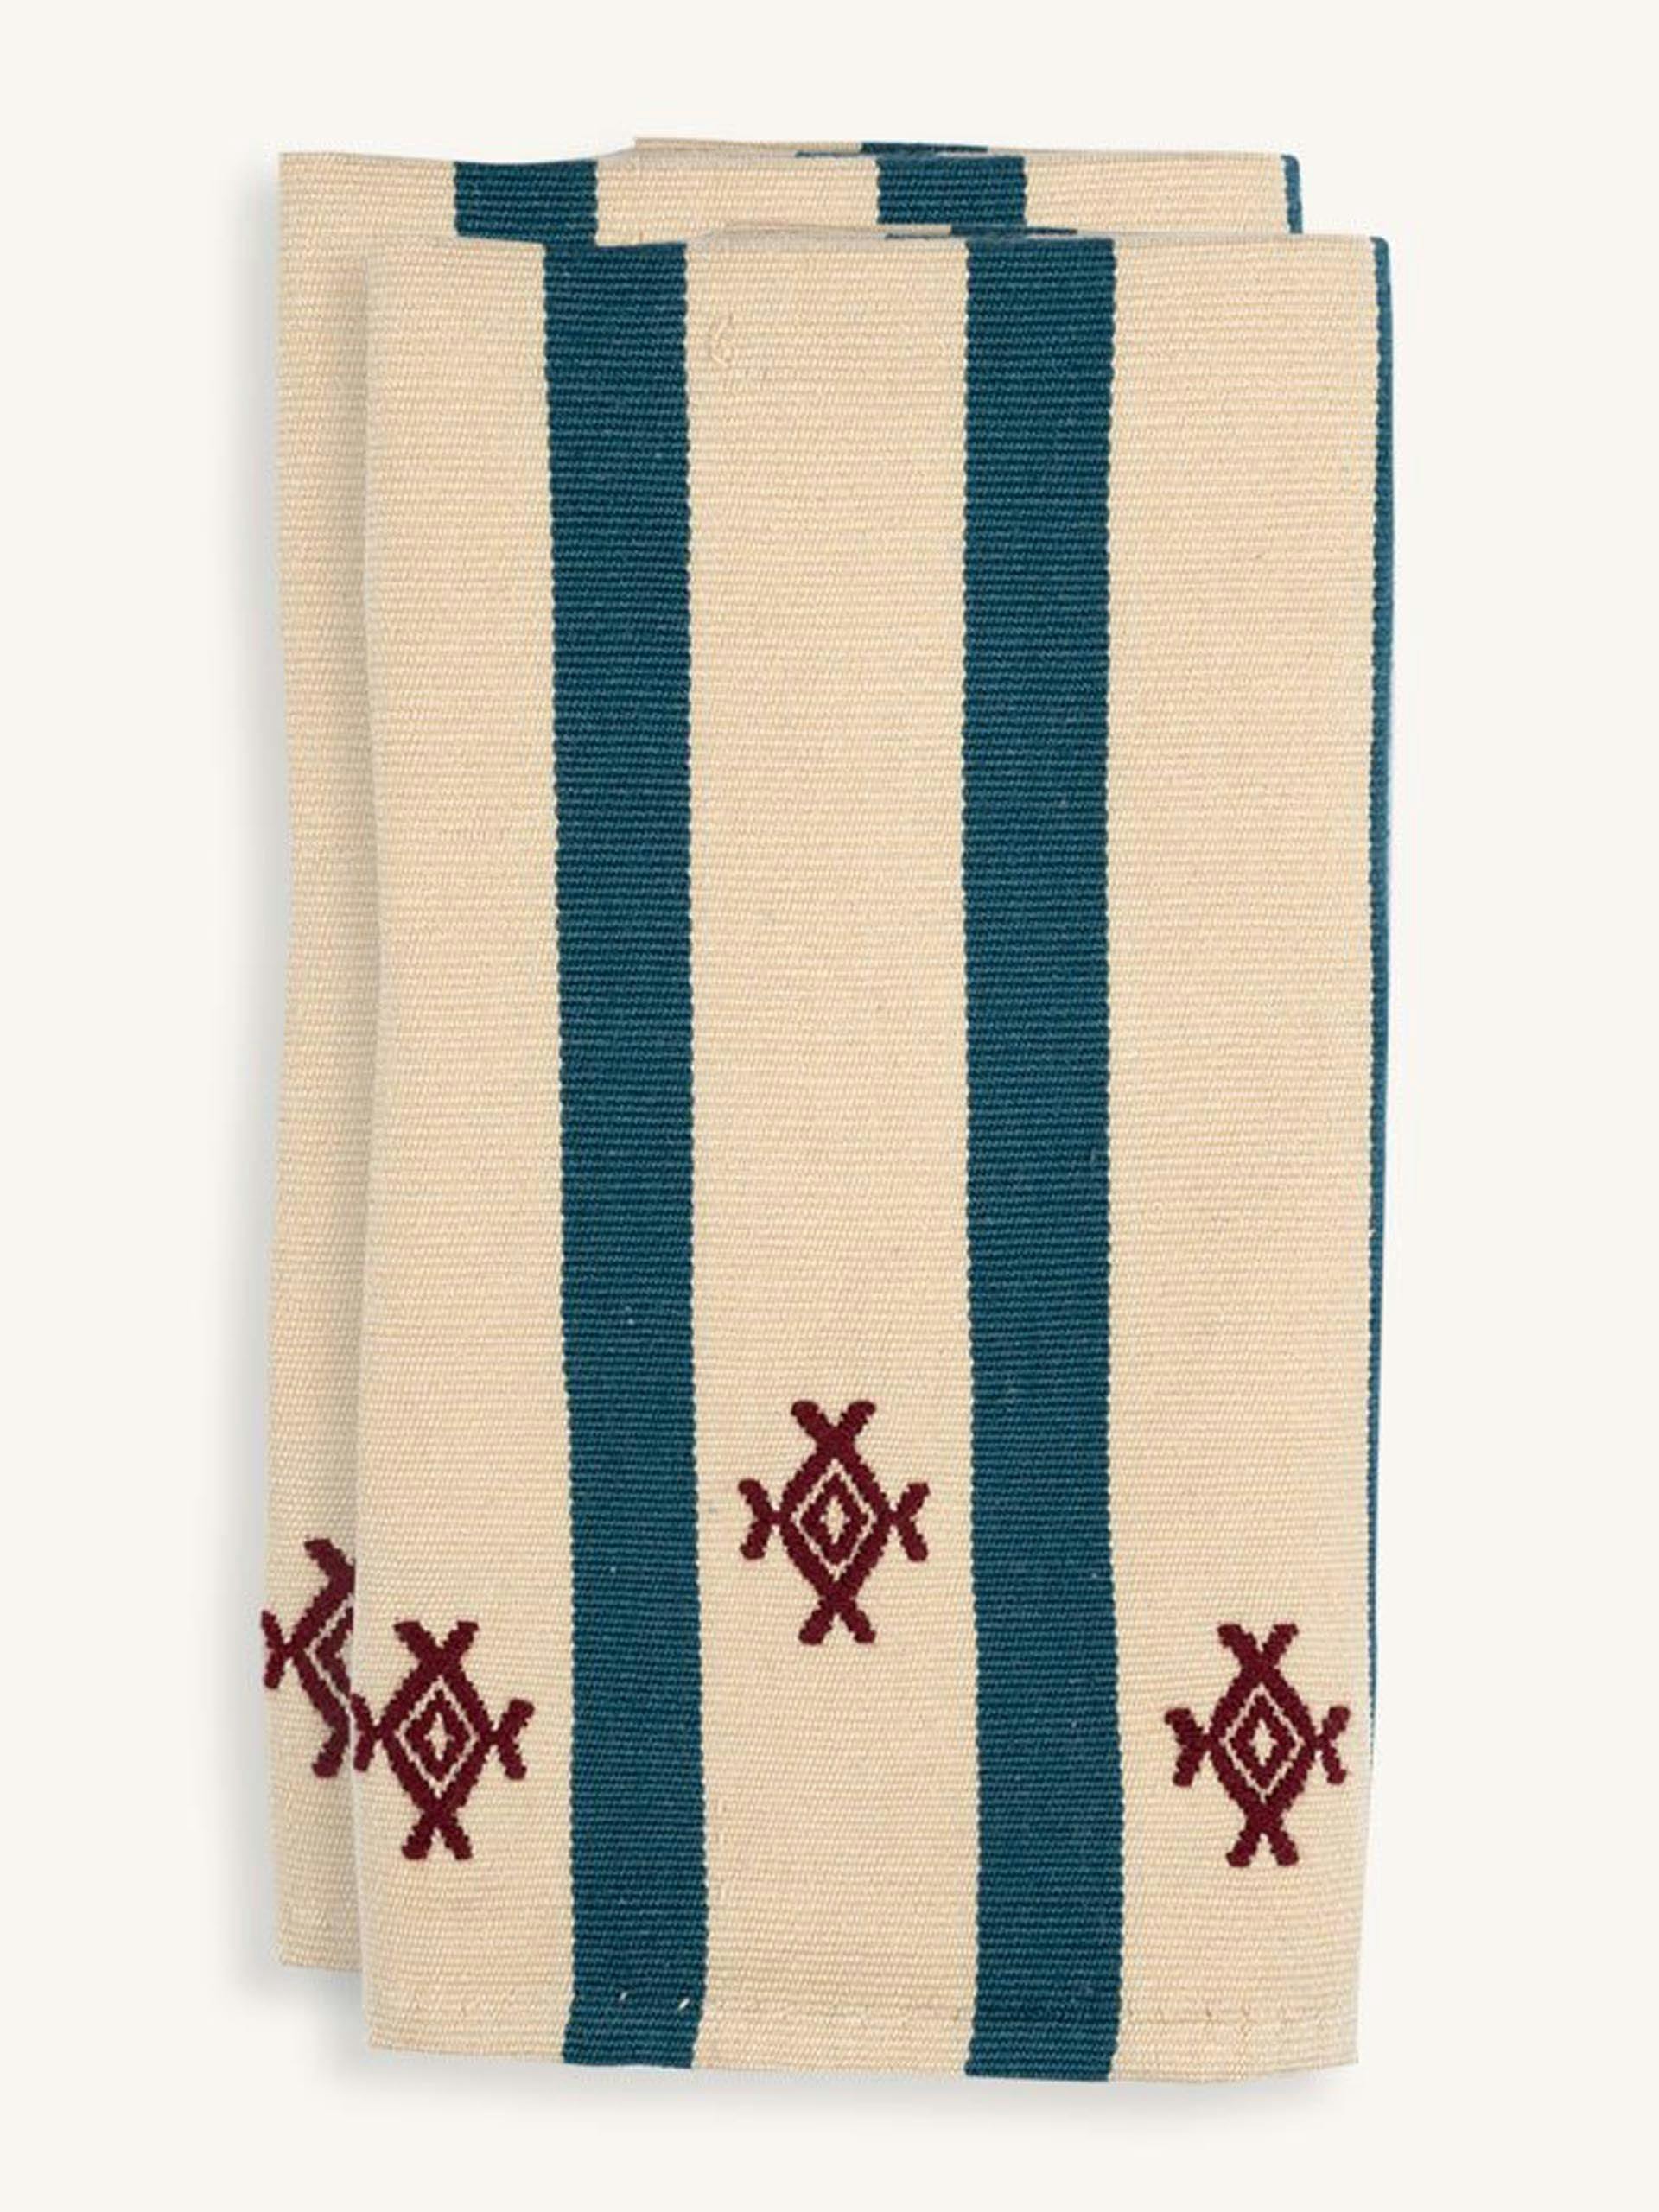 Izamna handwoven striped napkins (set of 2)